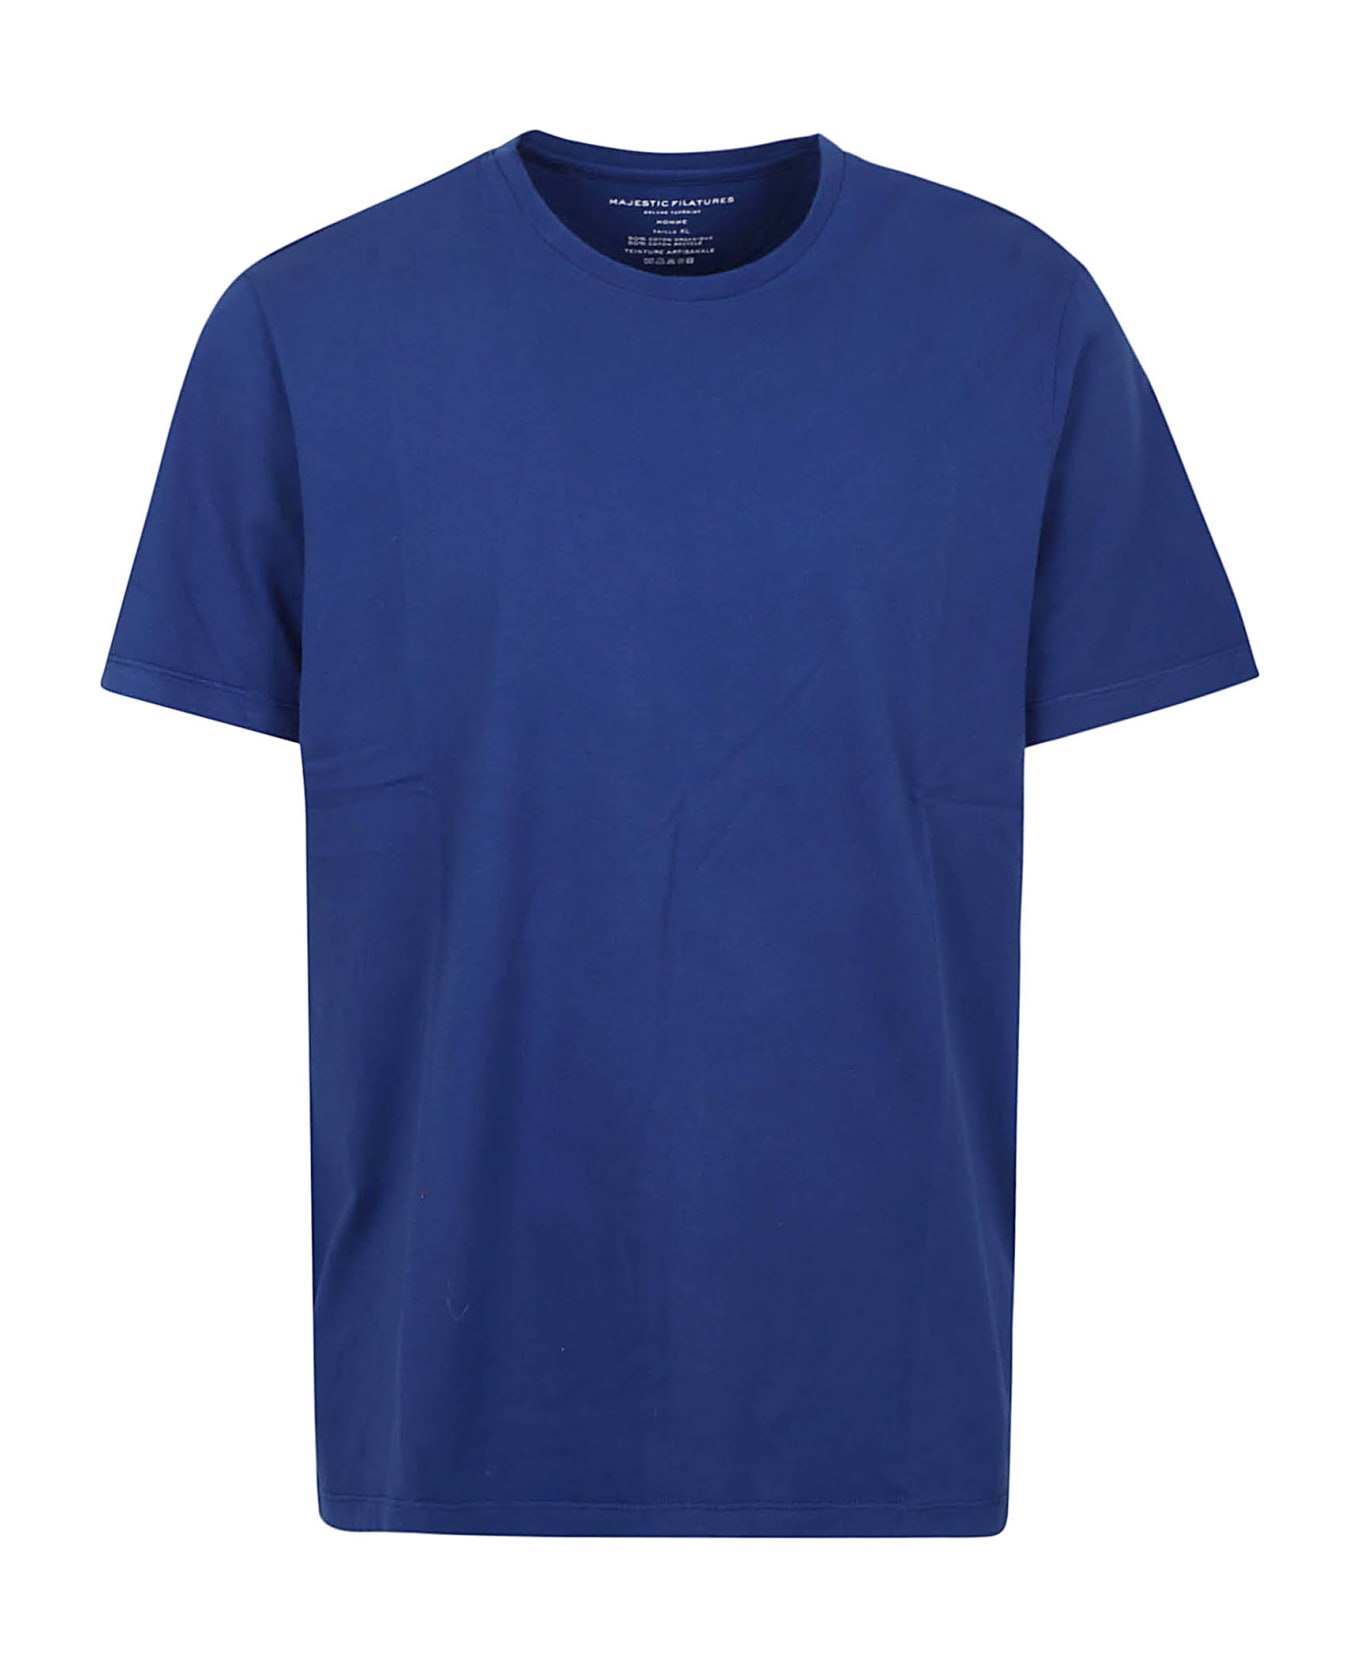 Majestic Filatures T-shirt - Bleu Roi